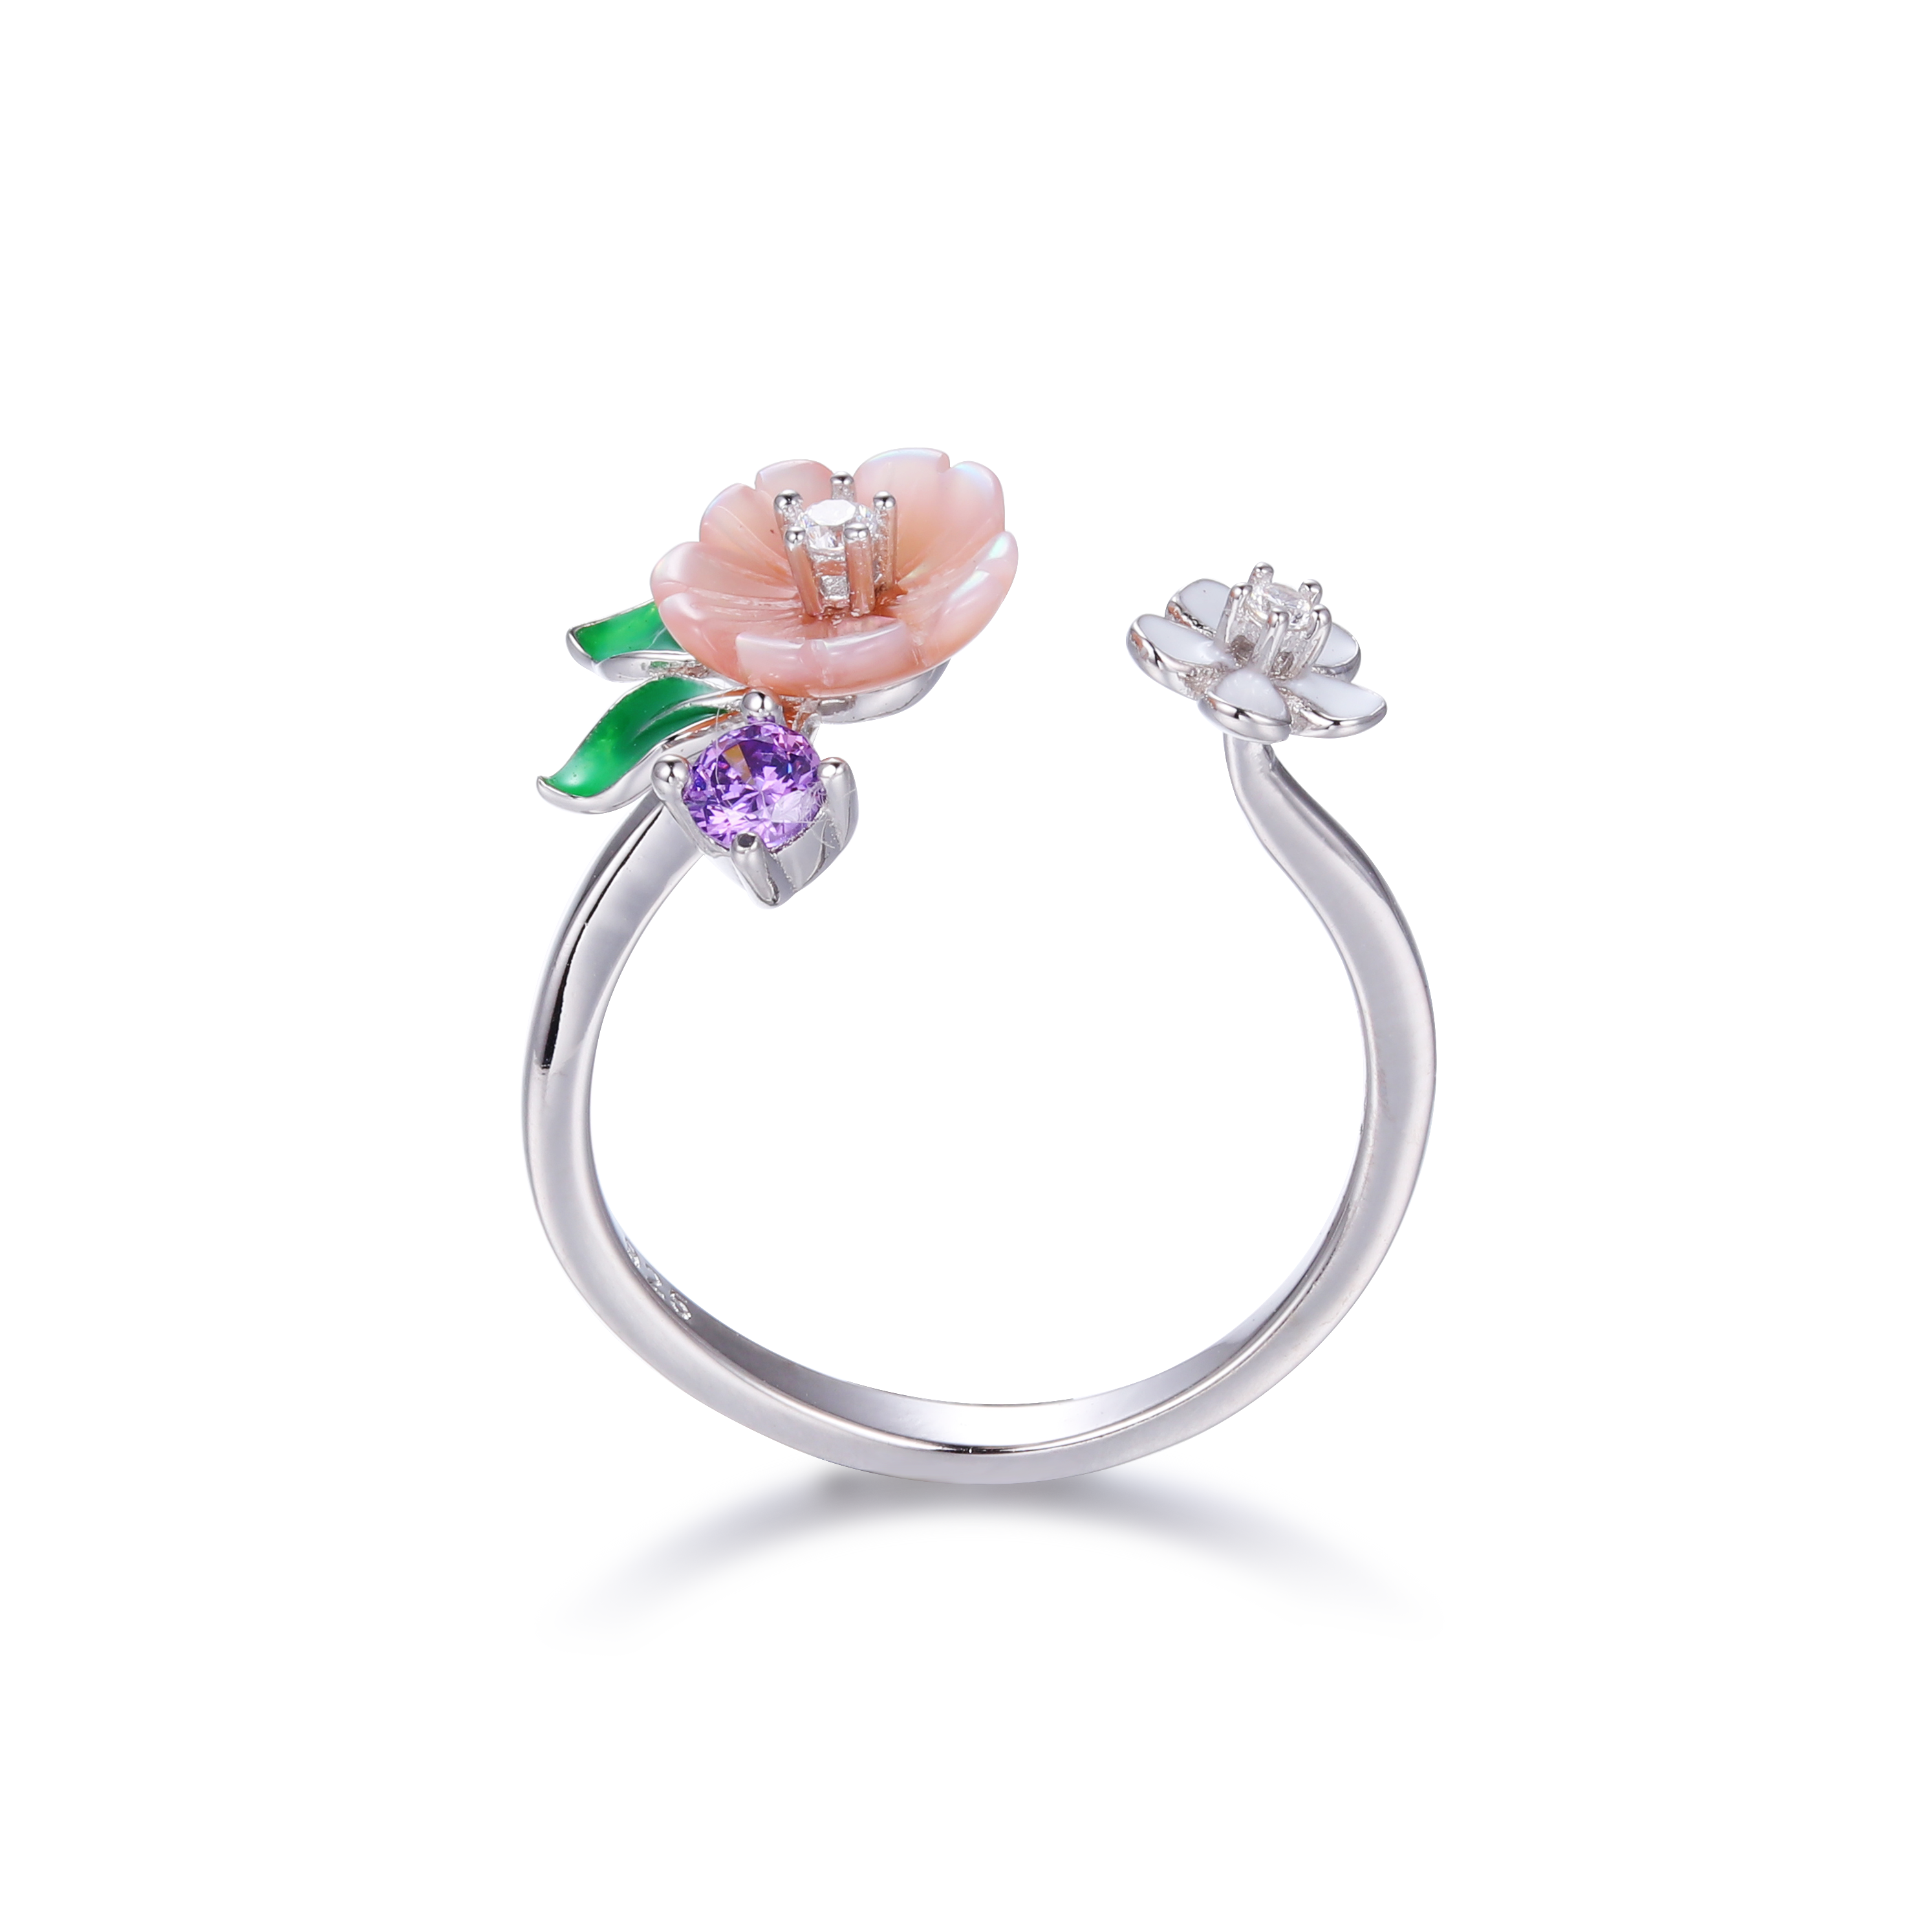 Peach Blossom Ring